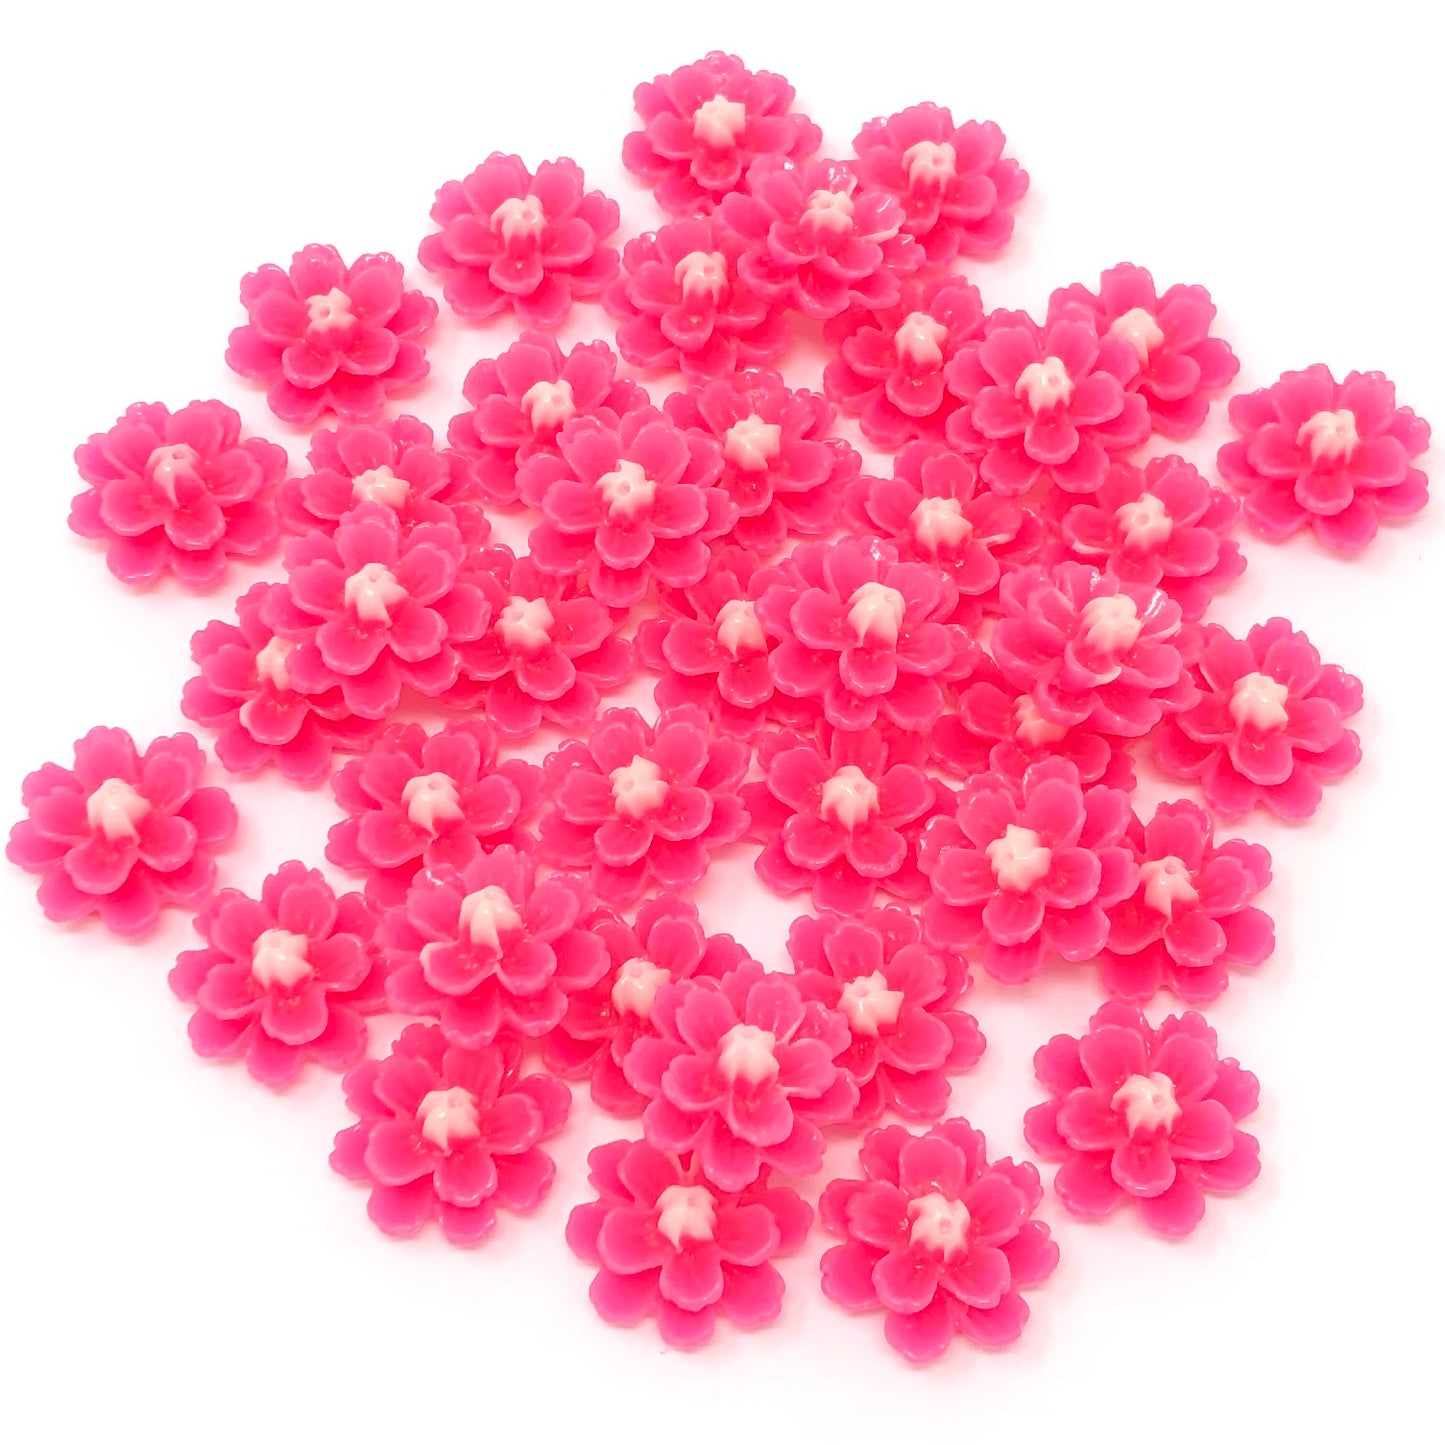 Pink 13mm Resin Flower Flatbacks - Pack of 40